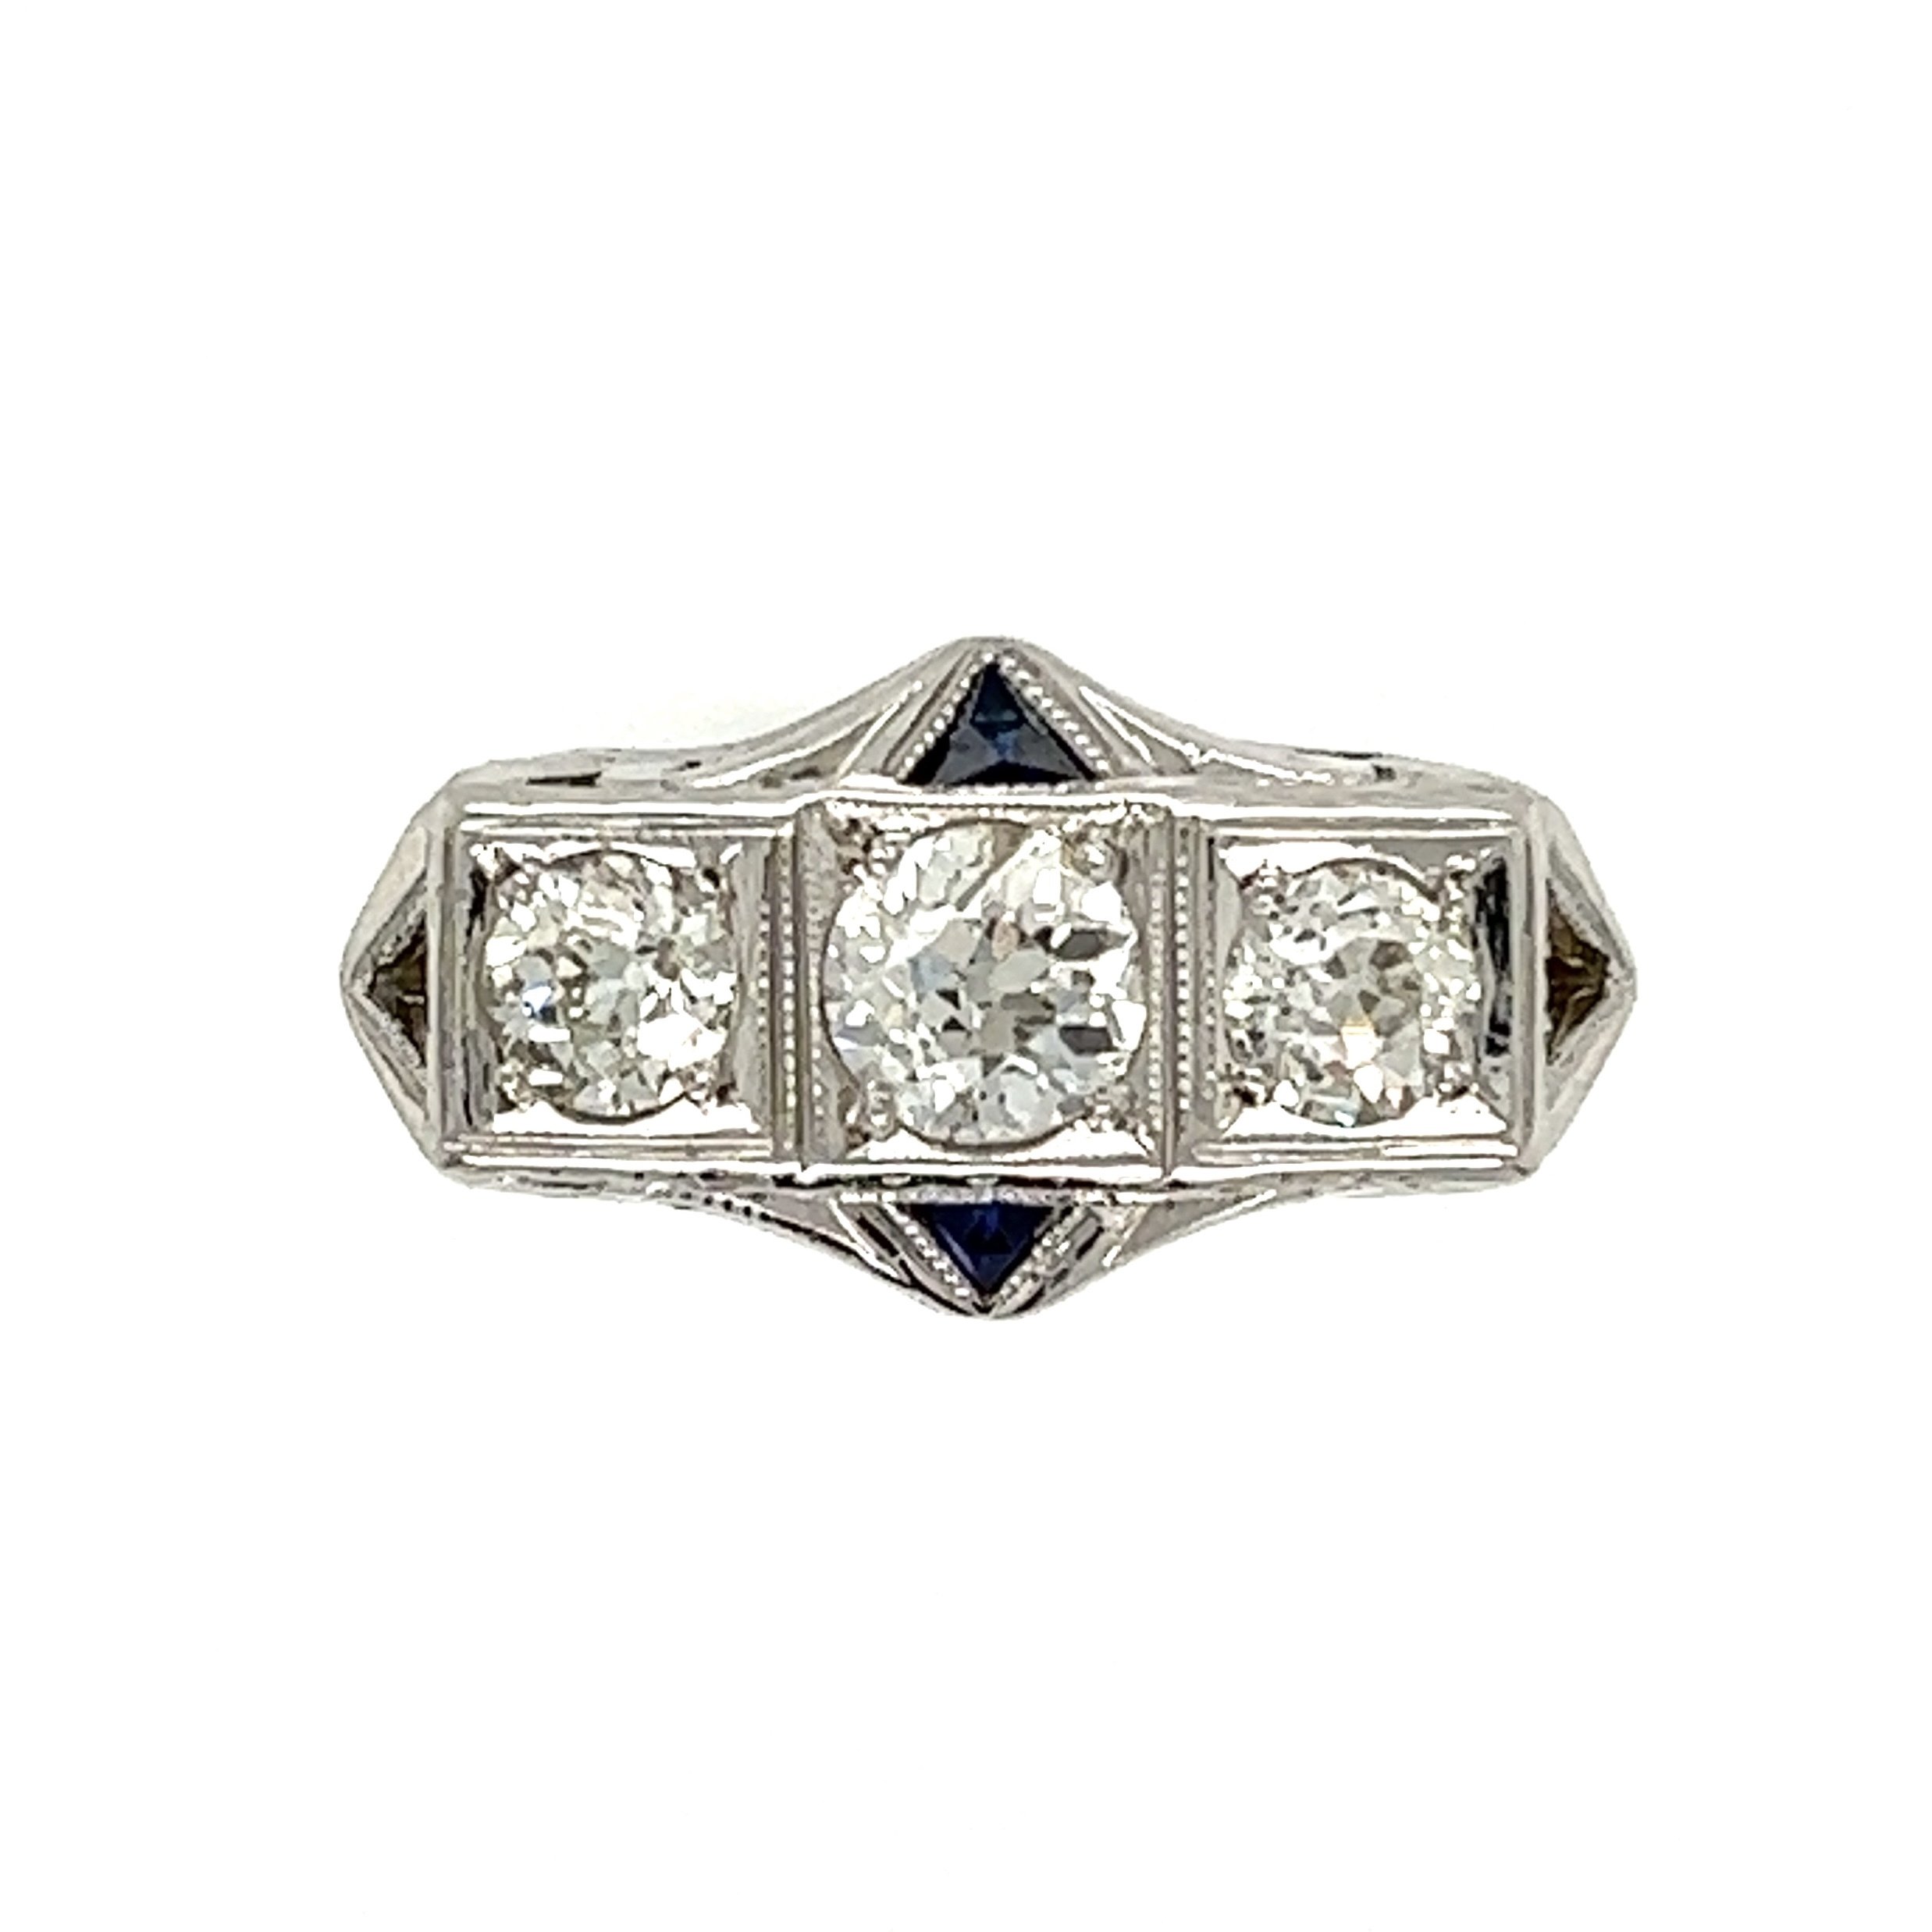 18K WG Art Deco 3 Diamond .75tcw & Blue Stone Ring 4.1g, s6.5